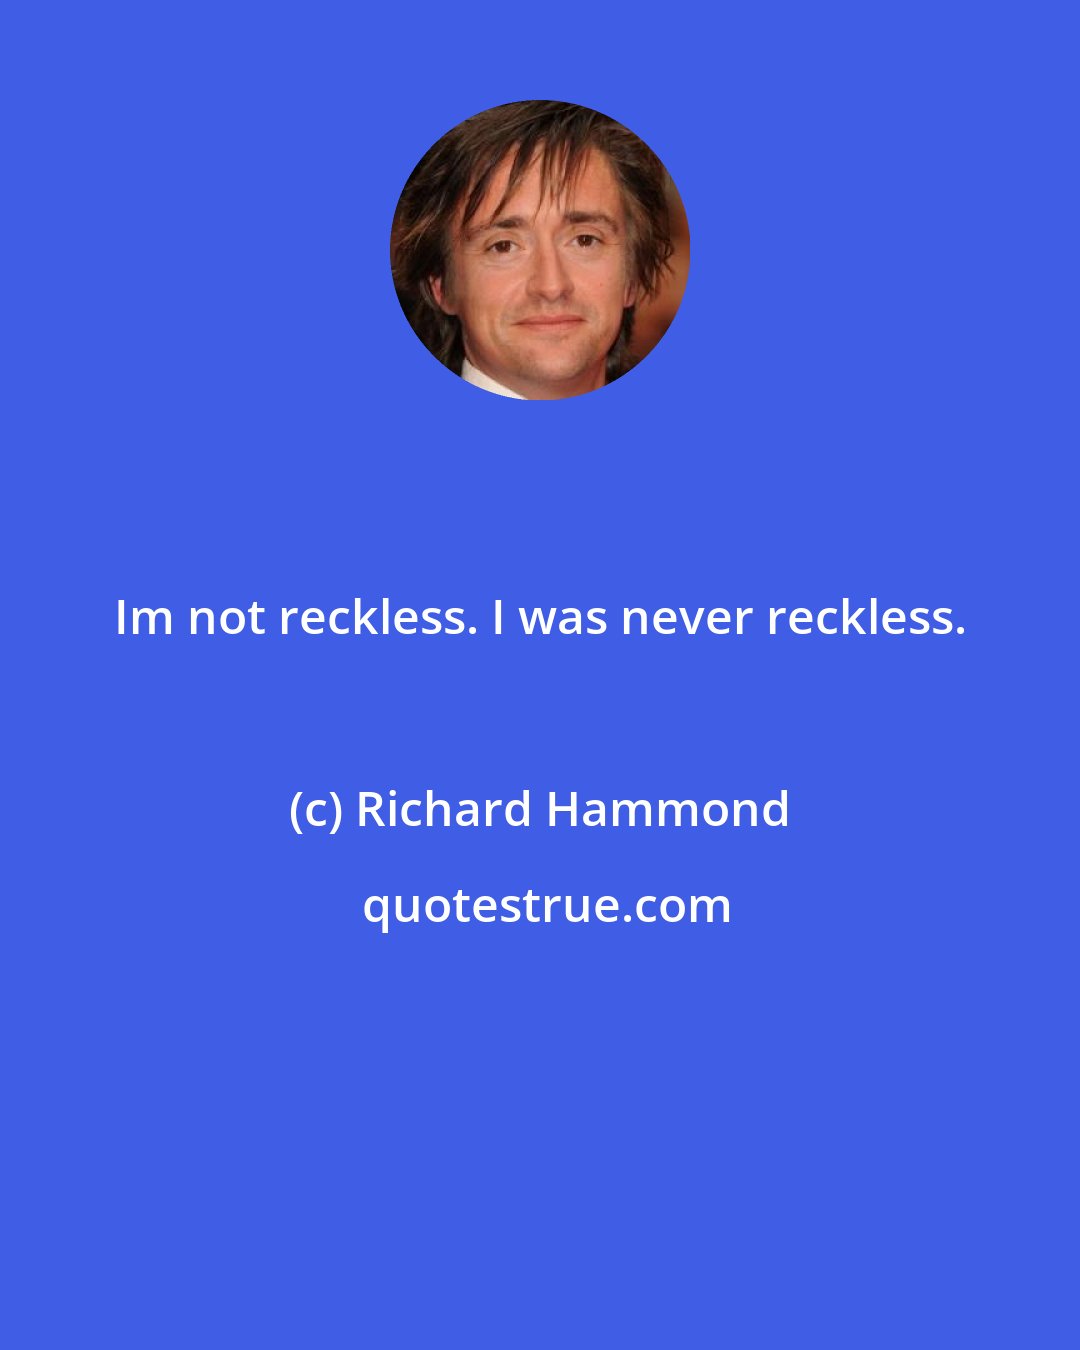 Richard Hammond: Im not reckless. I was never reckless.